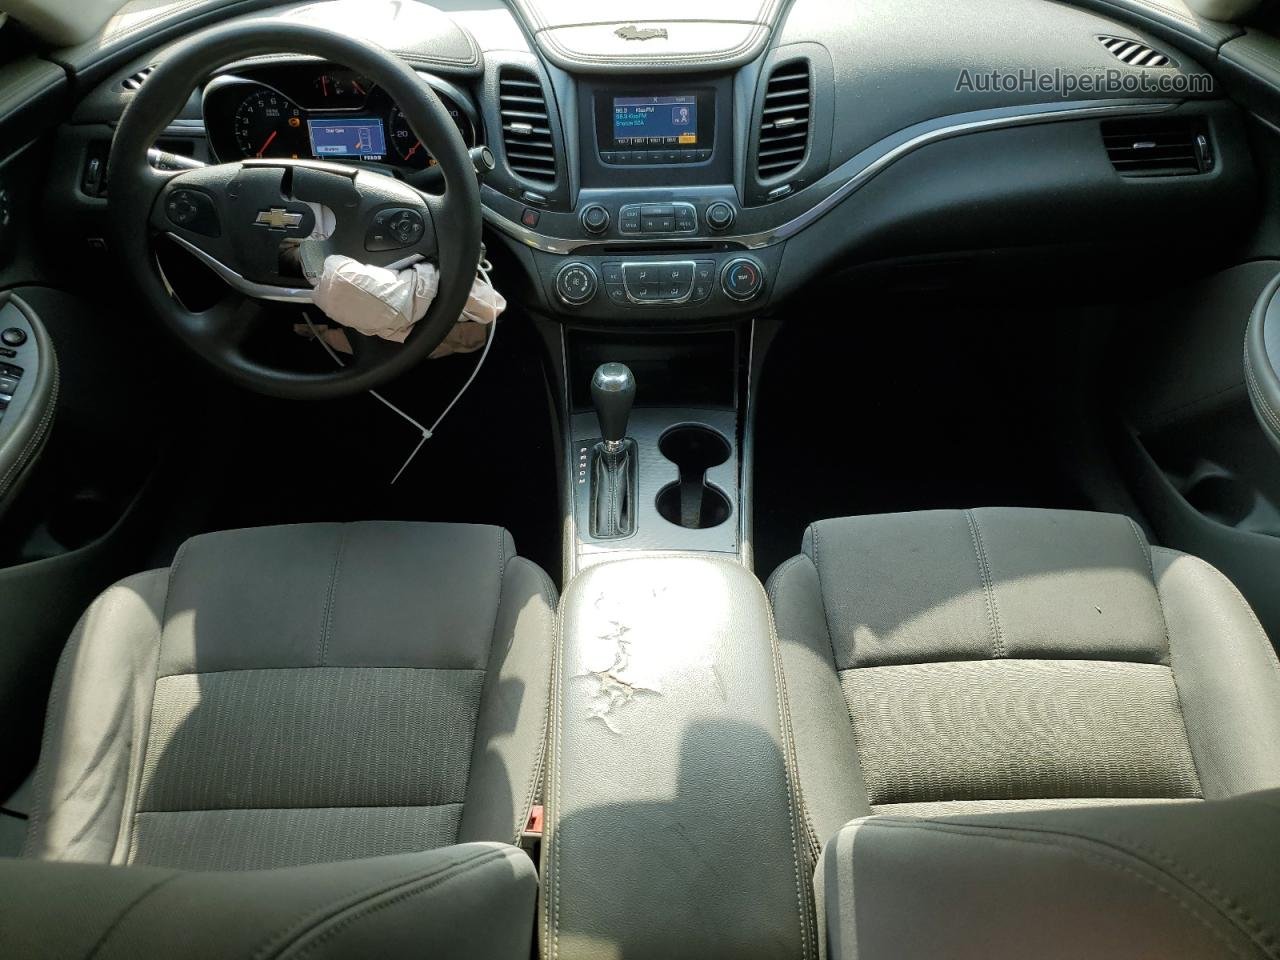 2014 Chevrolet Impala Ls Синий vin: 1G11Y5SL7EU145062